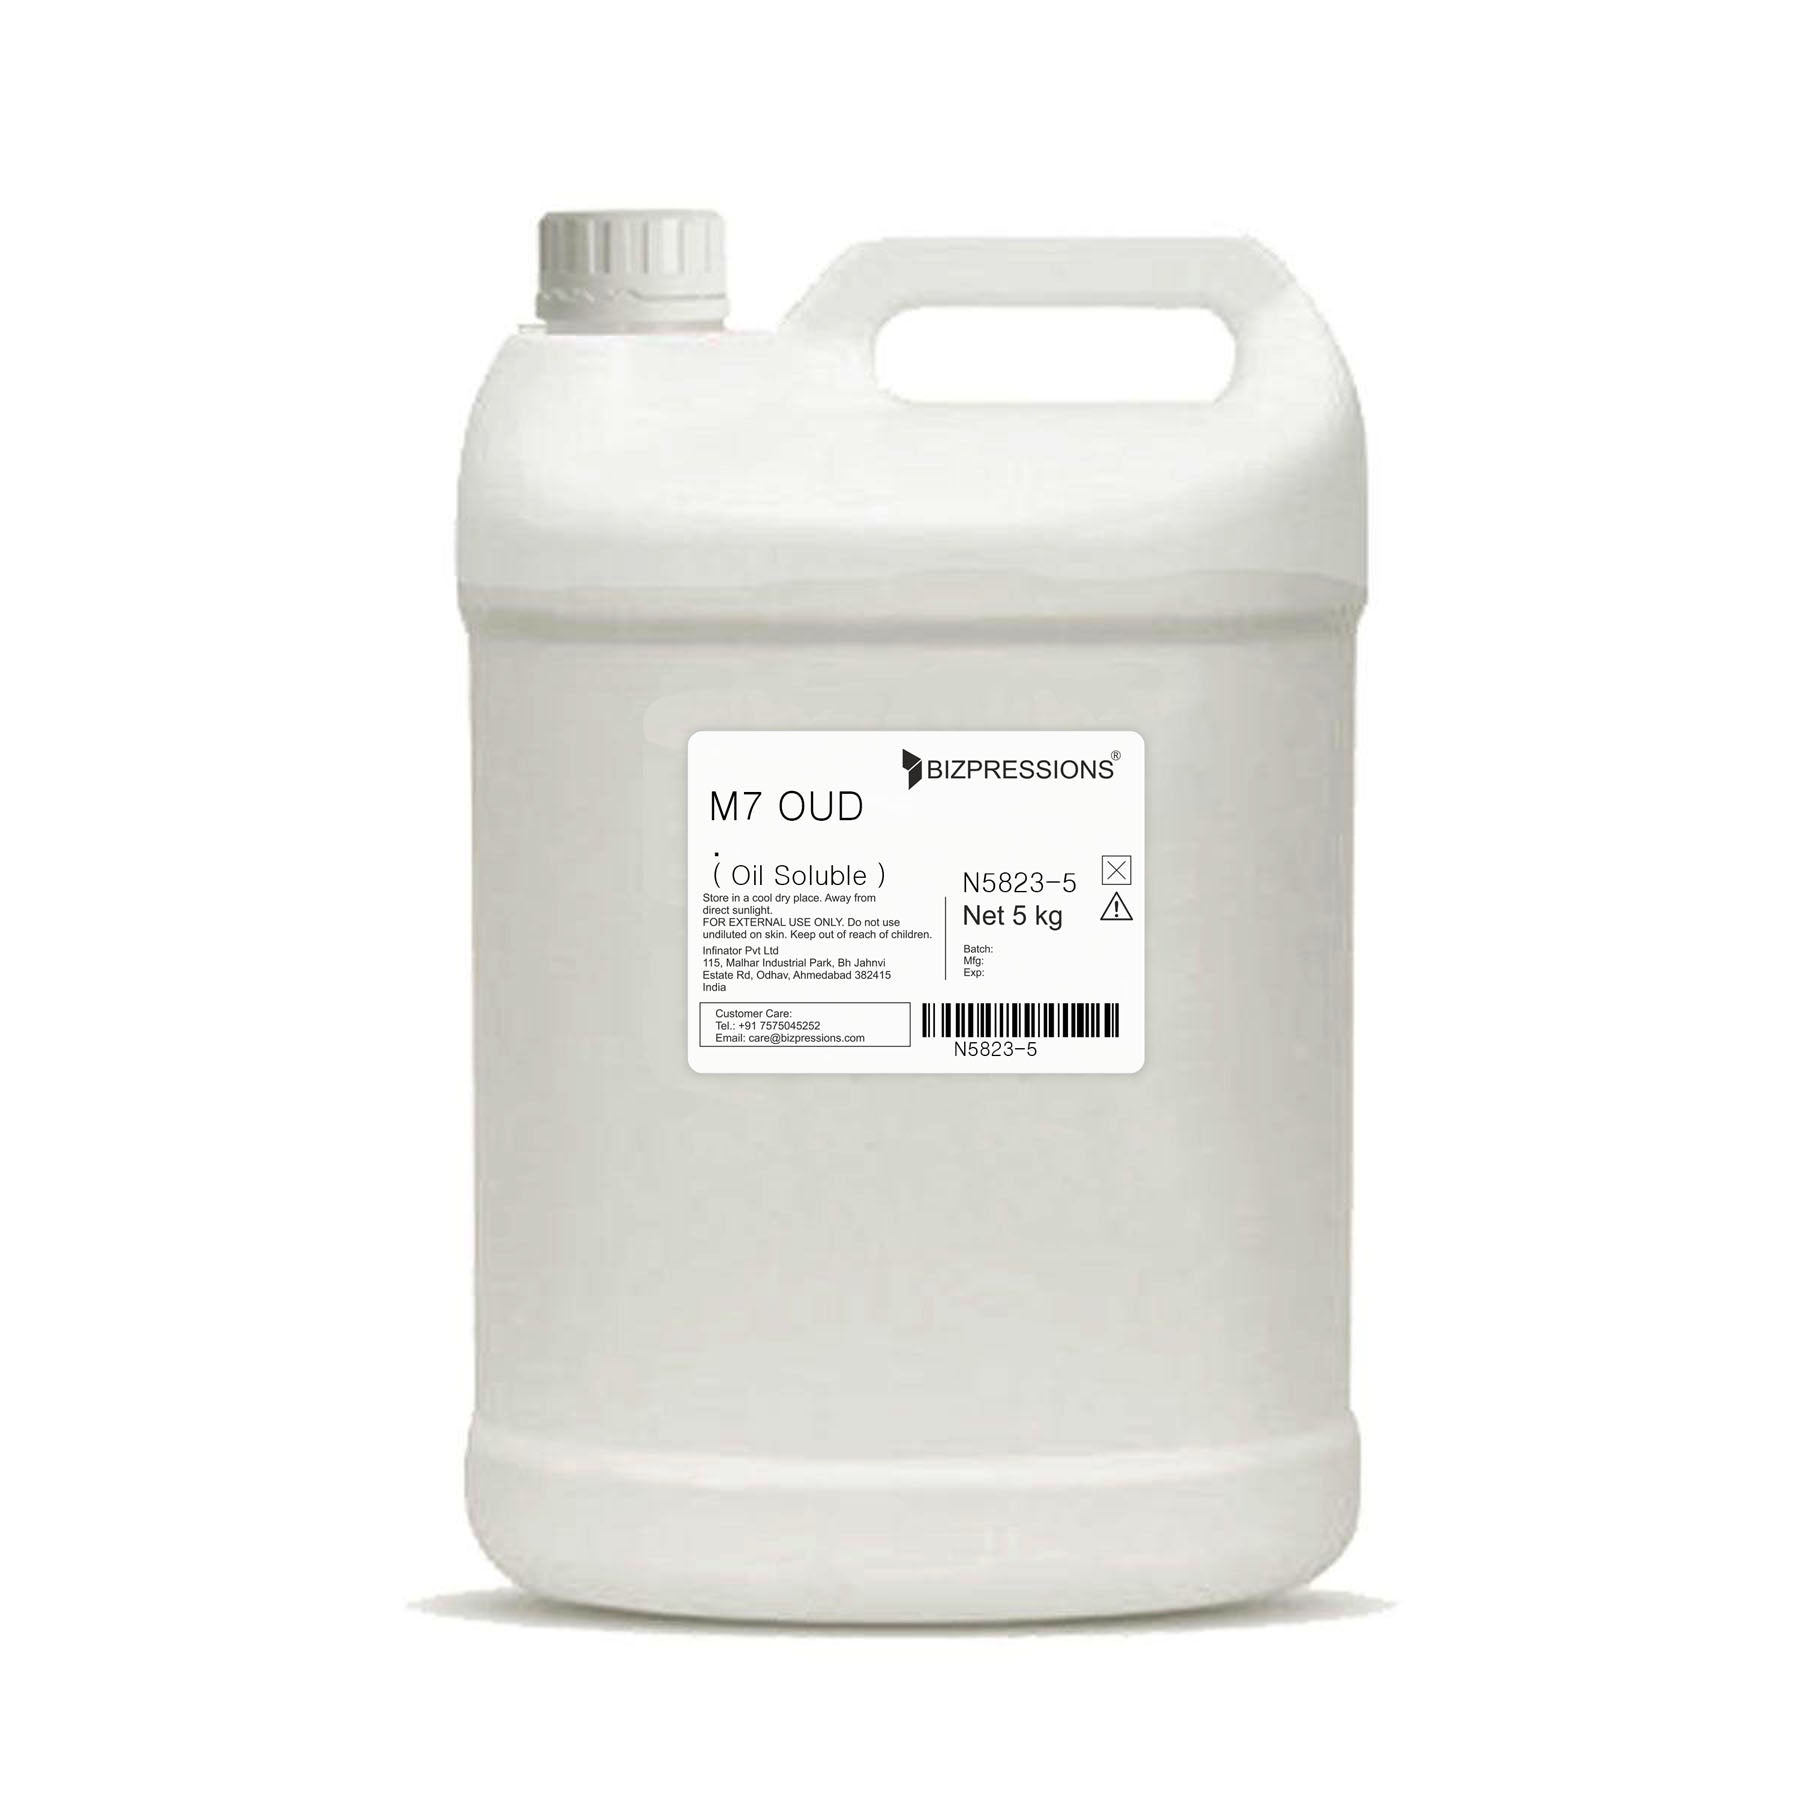 M7 OUD - Fragrance ( Oil Soluble ) - 5 kg